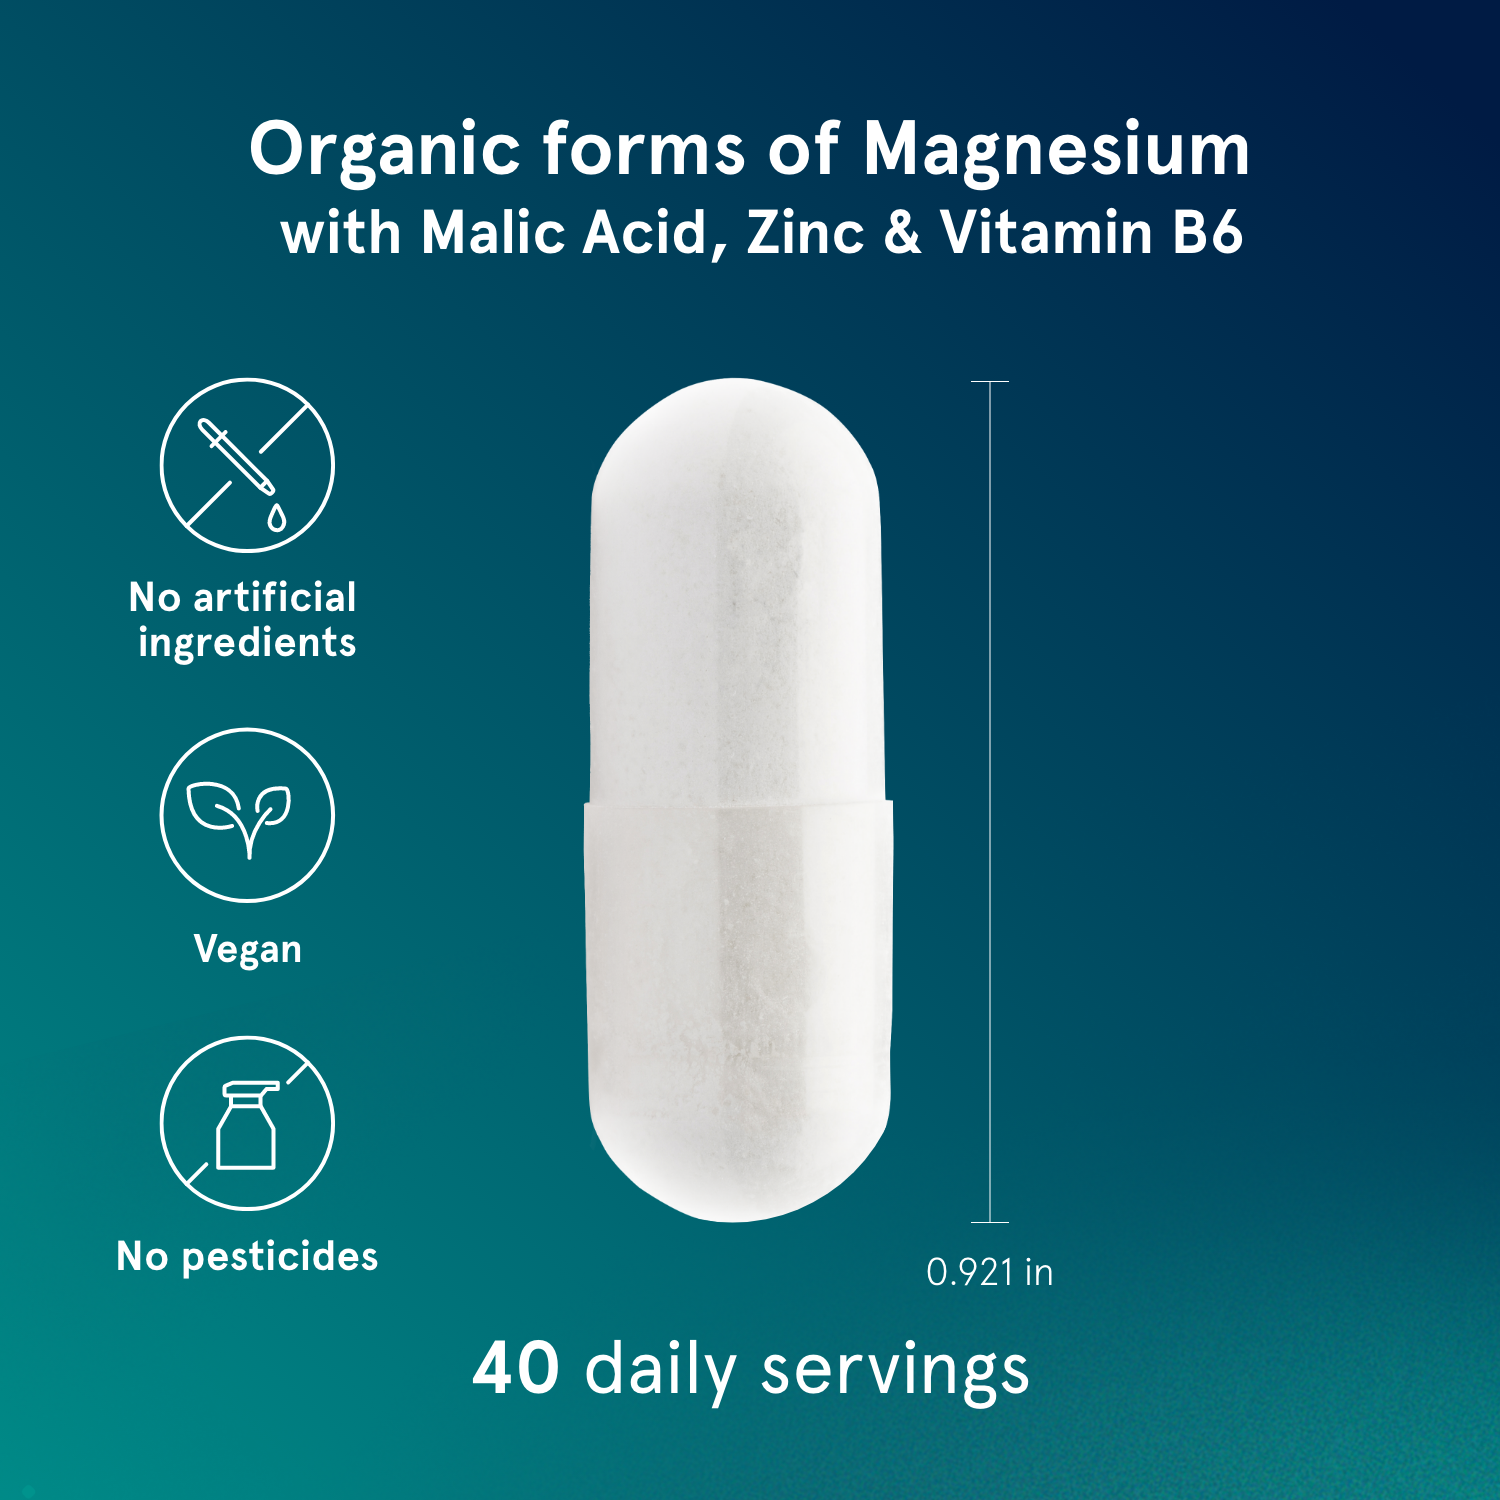 M3 - Easy absorbable magnesium complex - vegan - 120/180 capsules